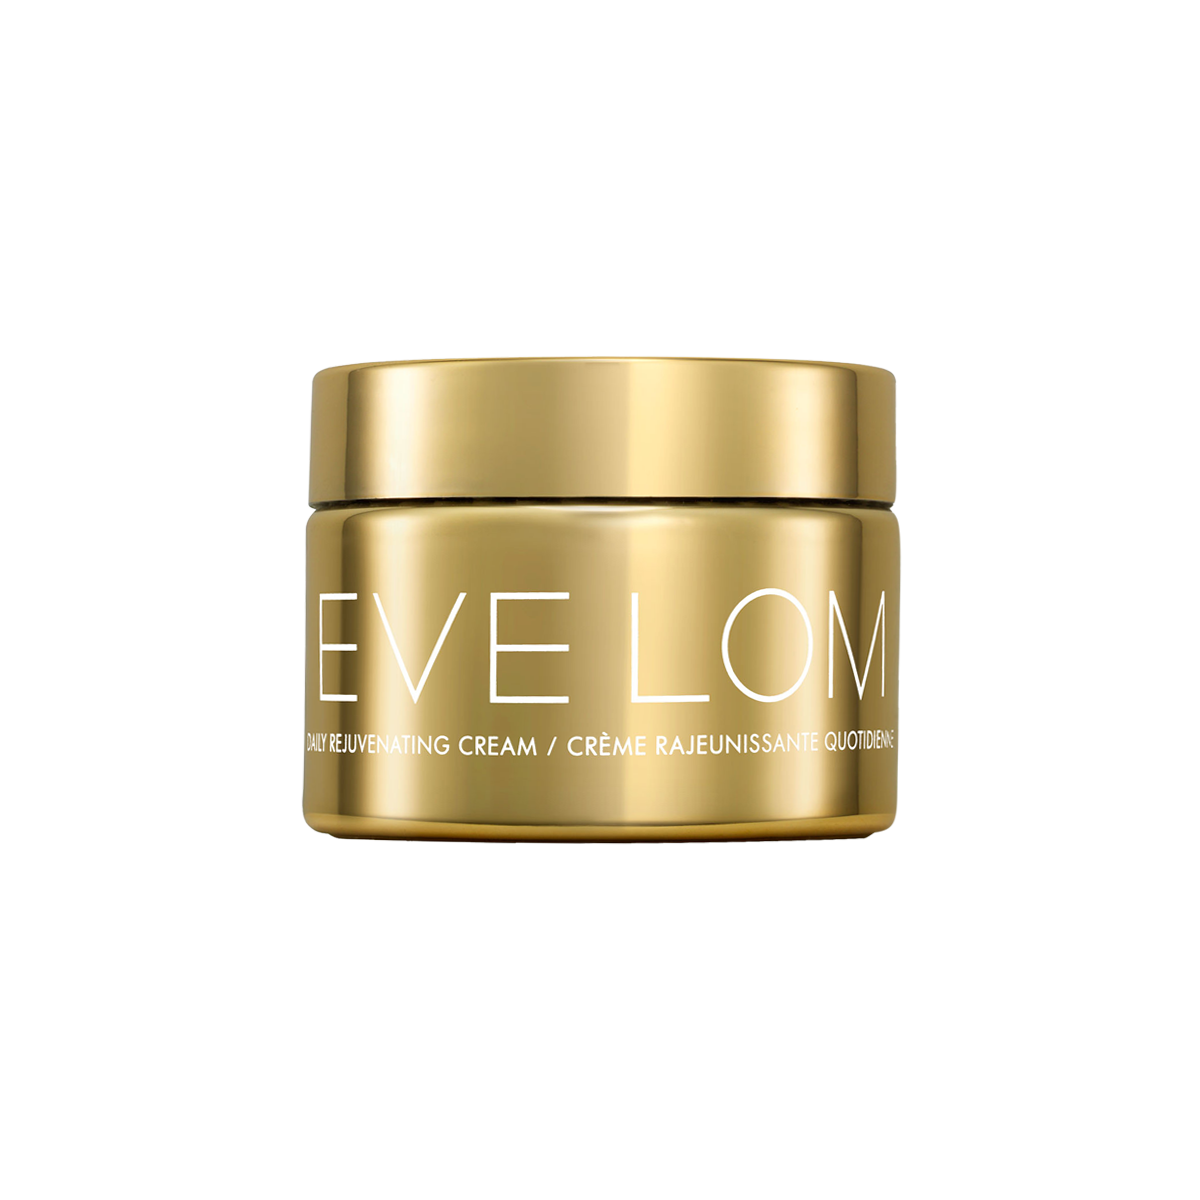 Eve Lom - Daily Rejuvenating Cream